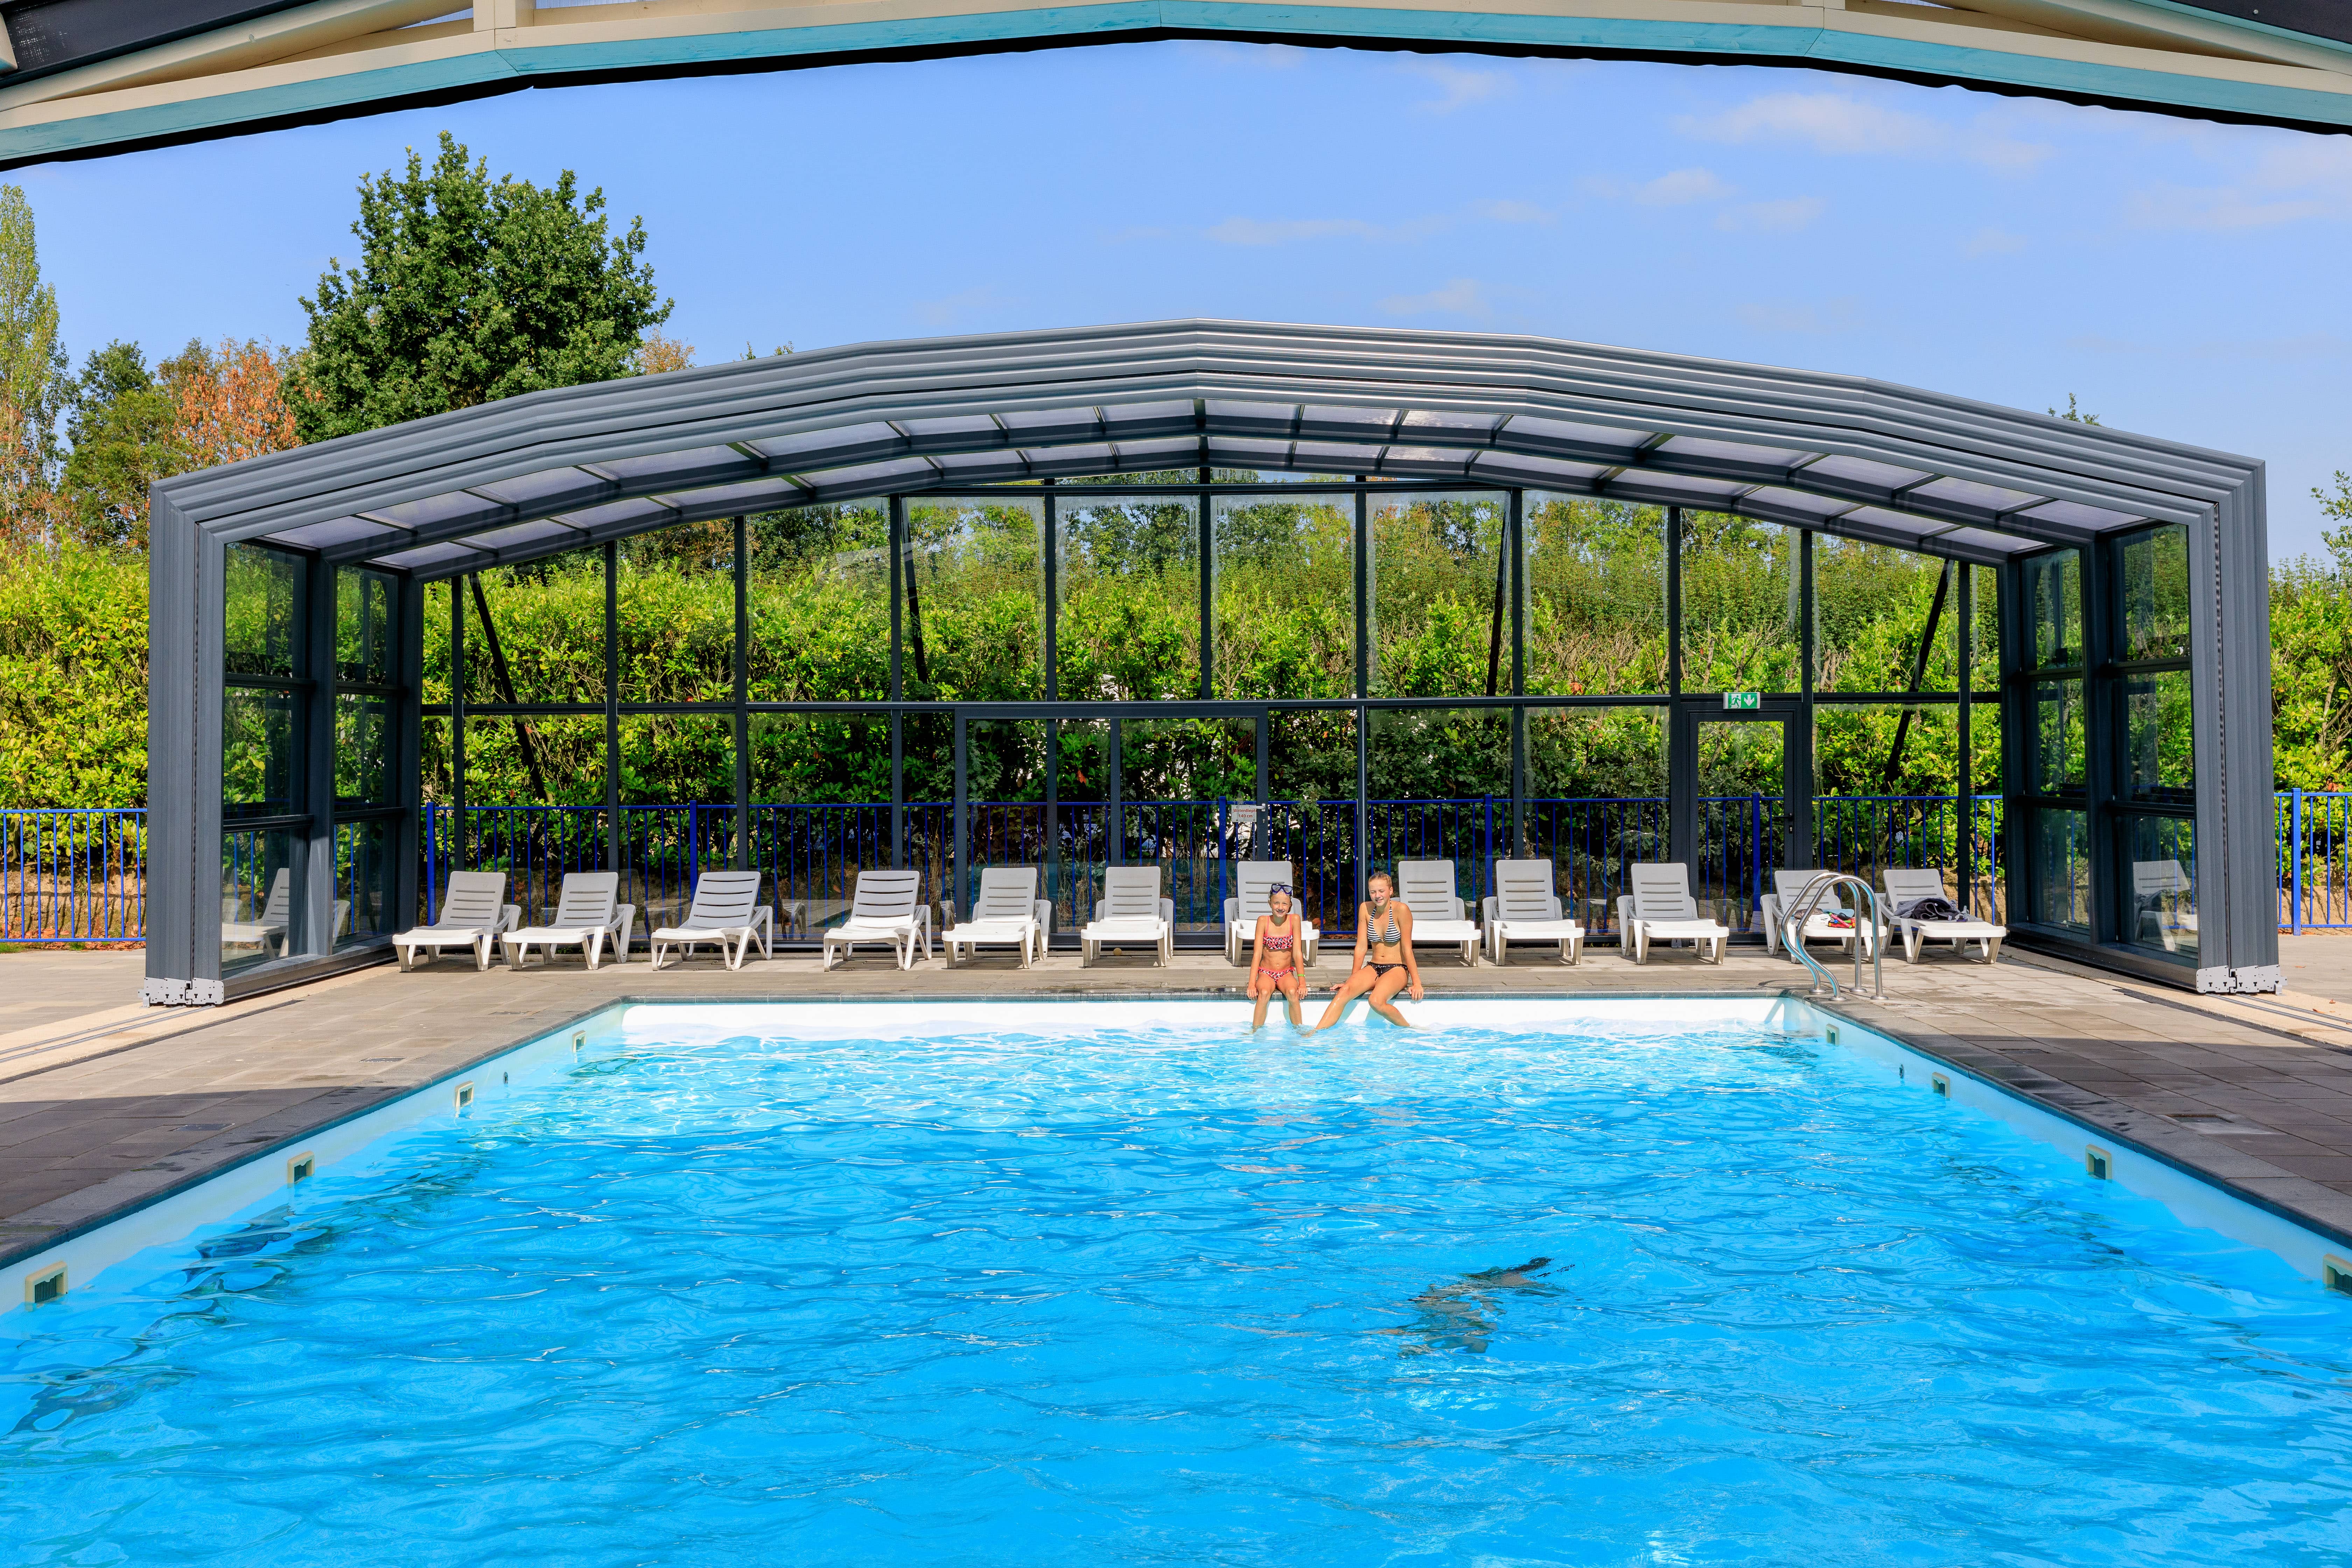 Public pool enclosures - Vollenhove, Netherlands